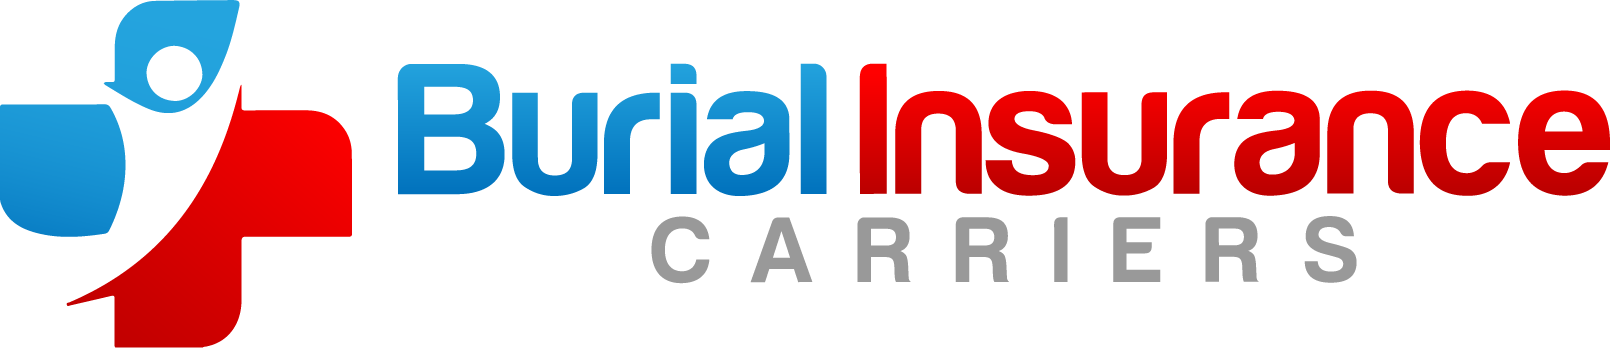 medigap insurance carriers logo